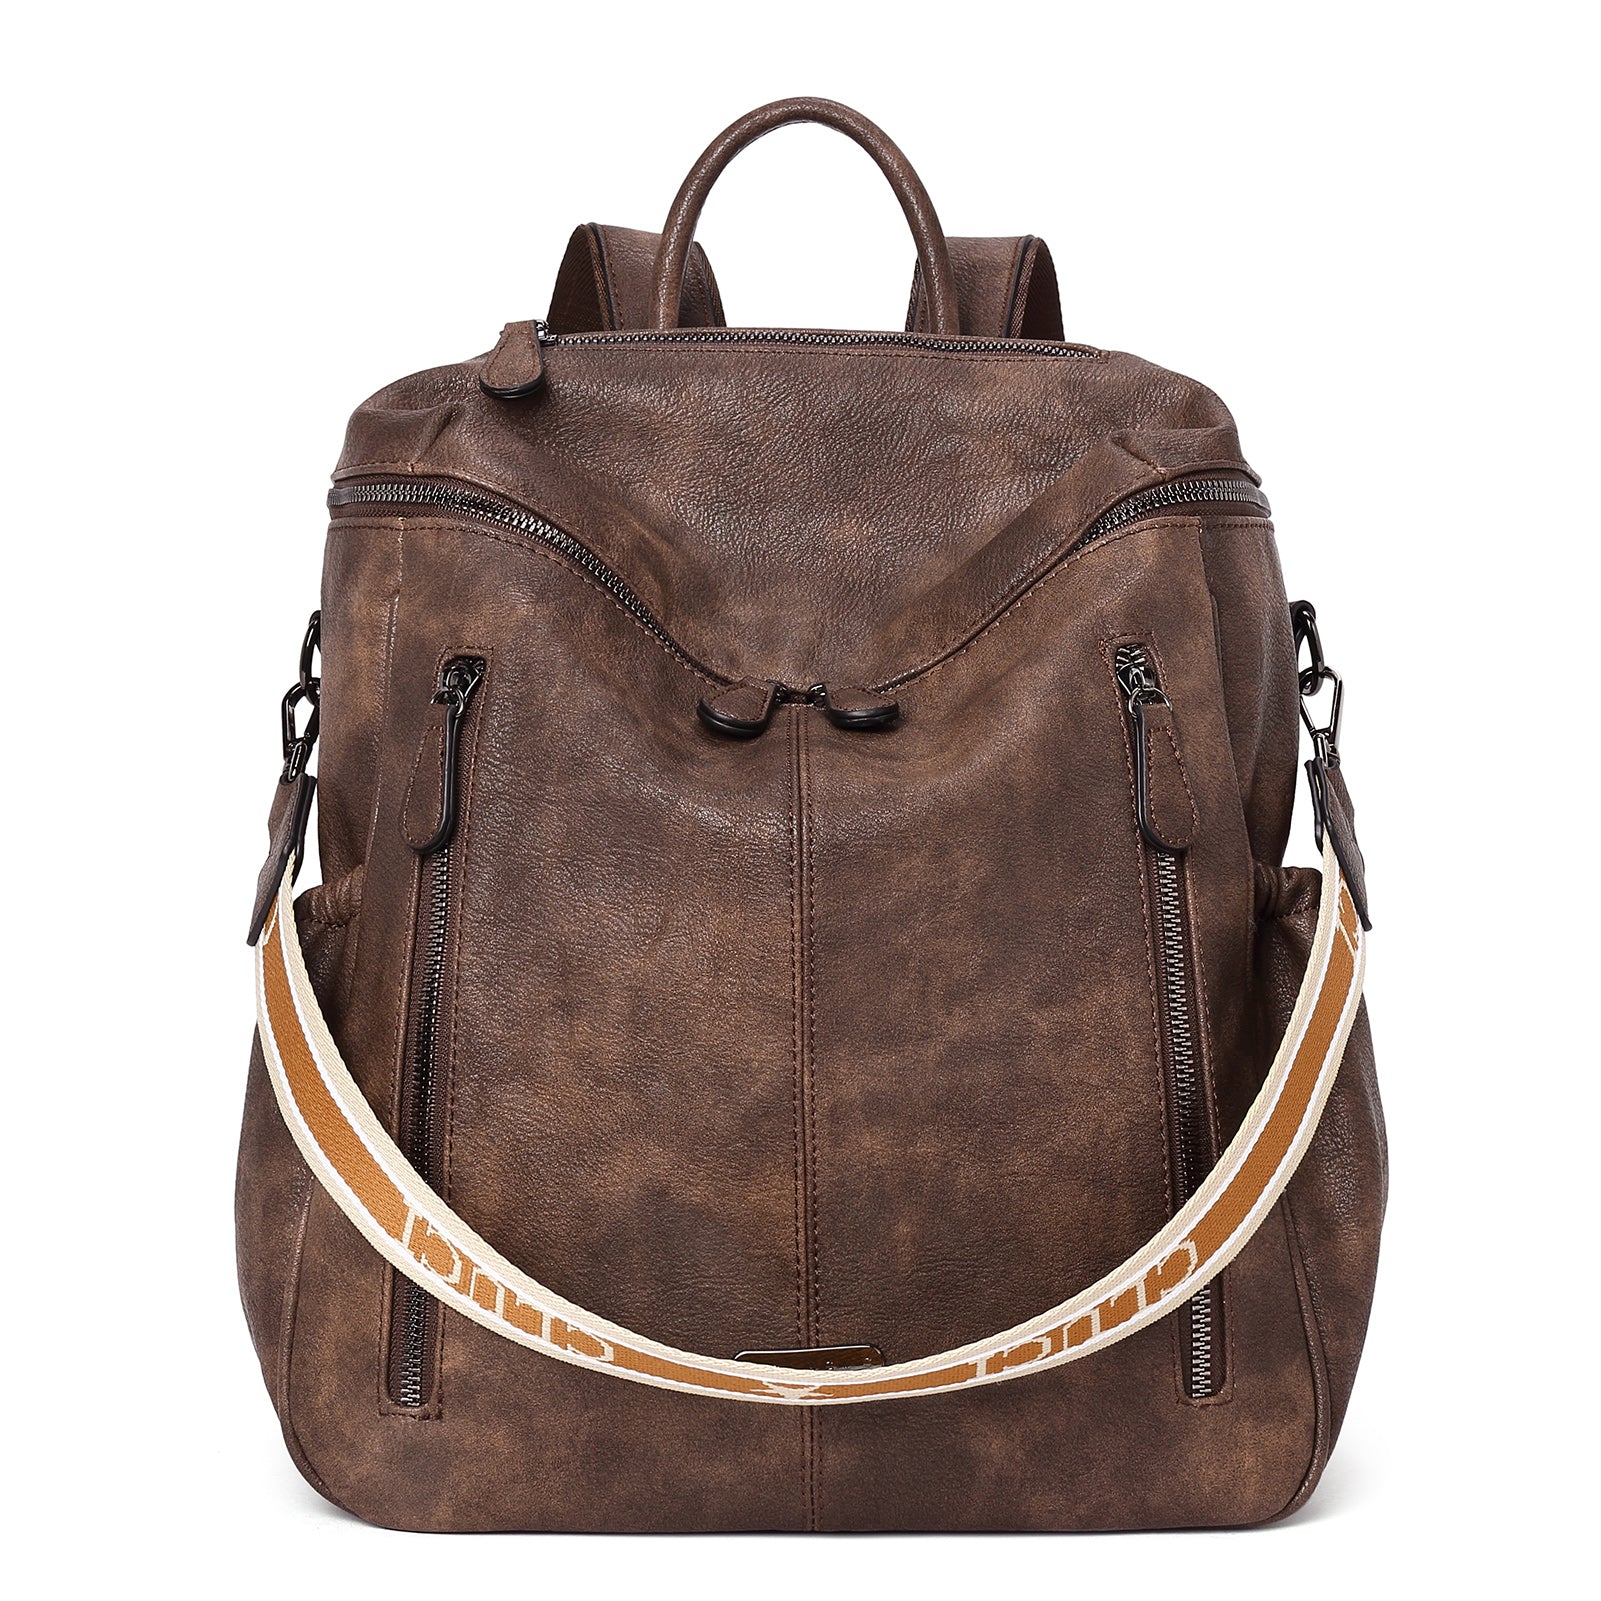 Brown Leather Backpack Purse, Suede Leather Bag, Leather Shoulder Bag,  Convertible Backpack for Women, Drawstring Backpack - Etsy